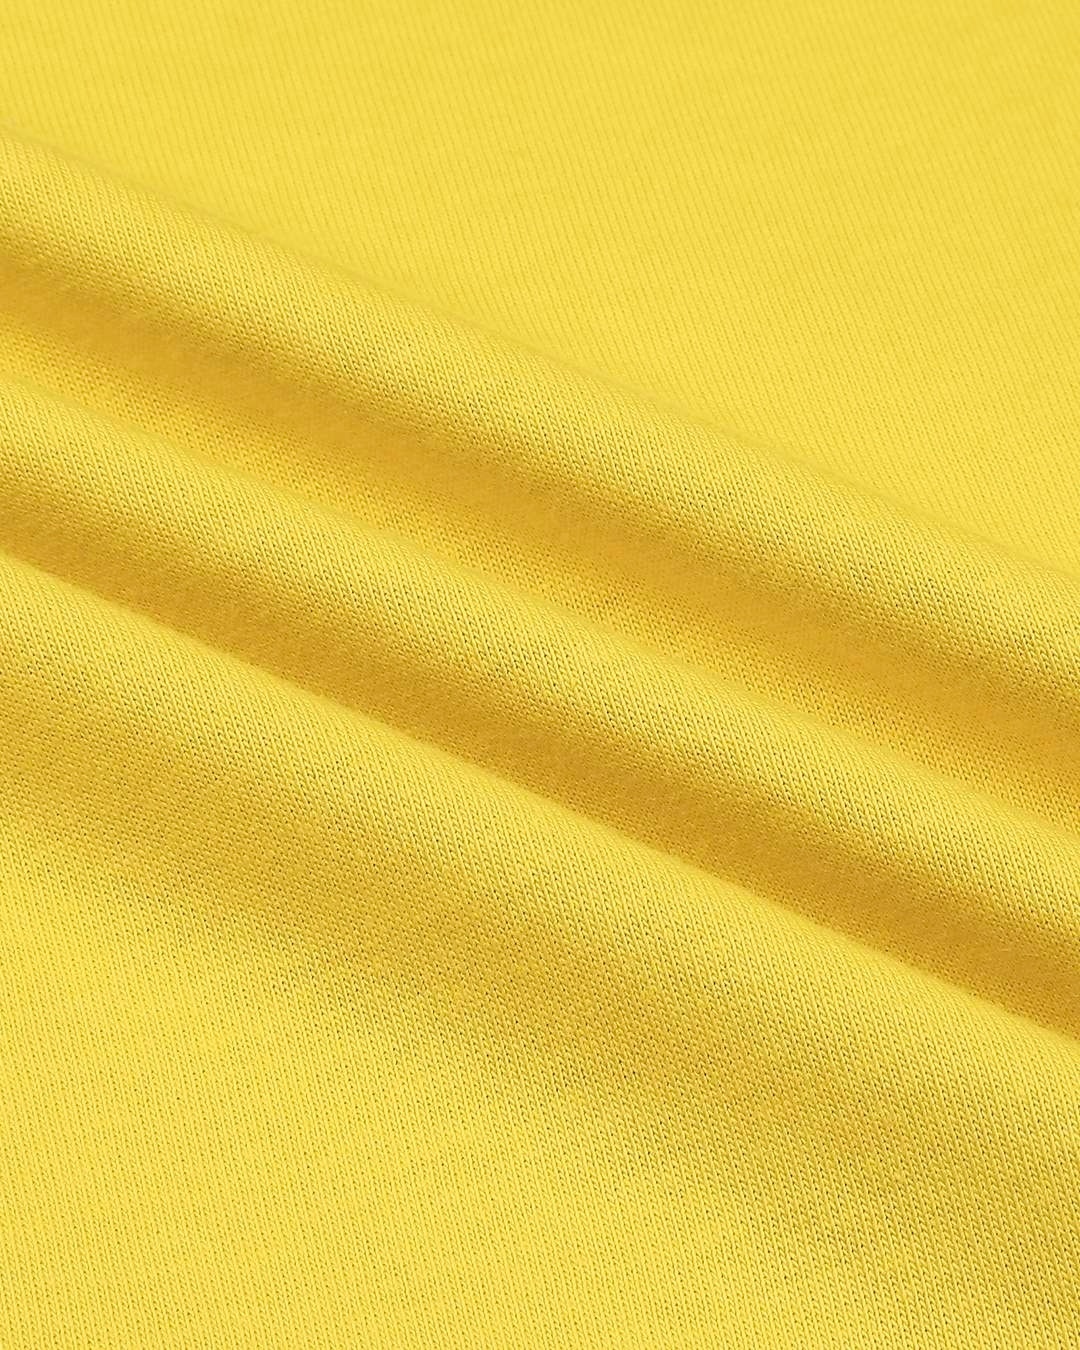 Shop Ceylon Yellow 3/4 Sleeves T-Shirt